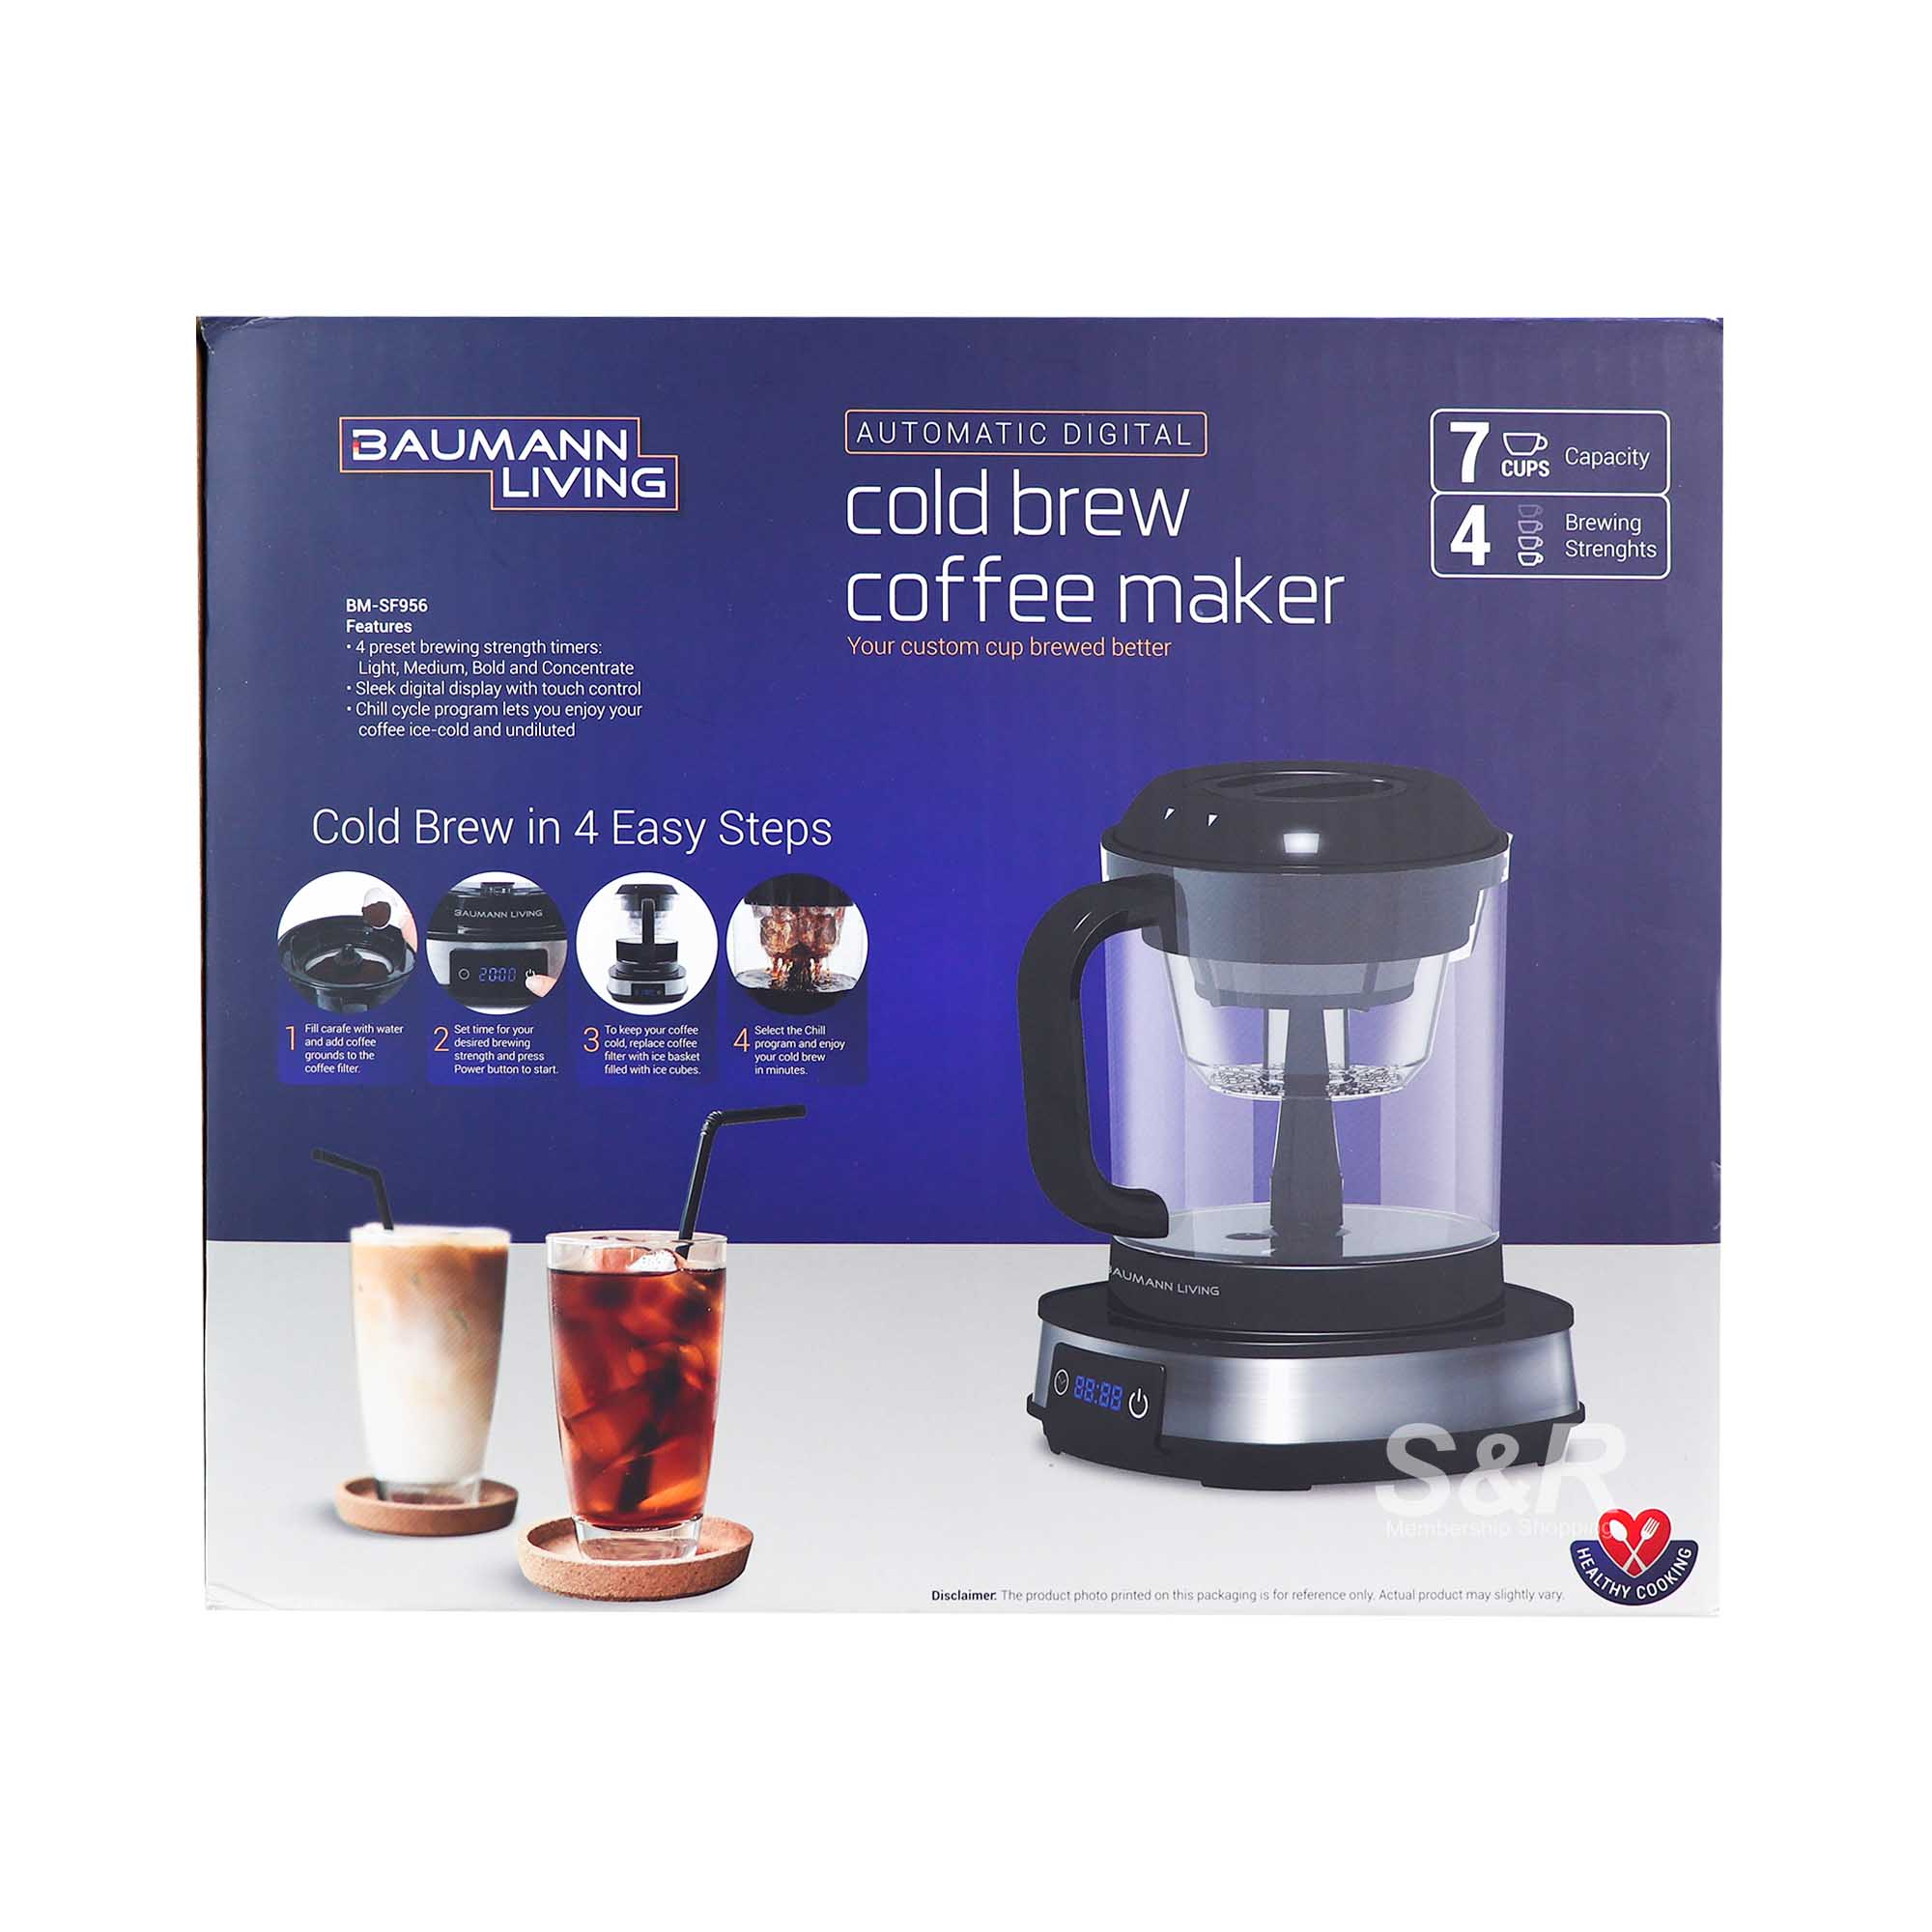 Baumann Living Automatic Digital Cold Brew Coffee Maker